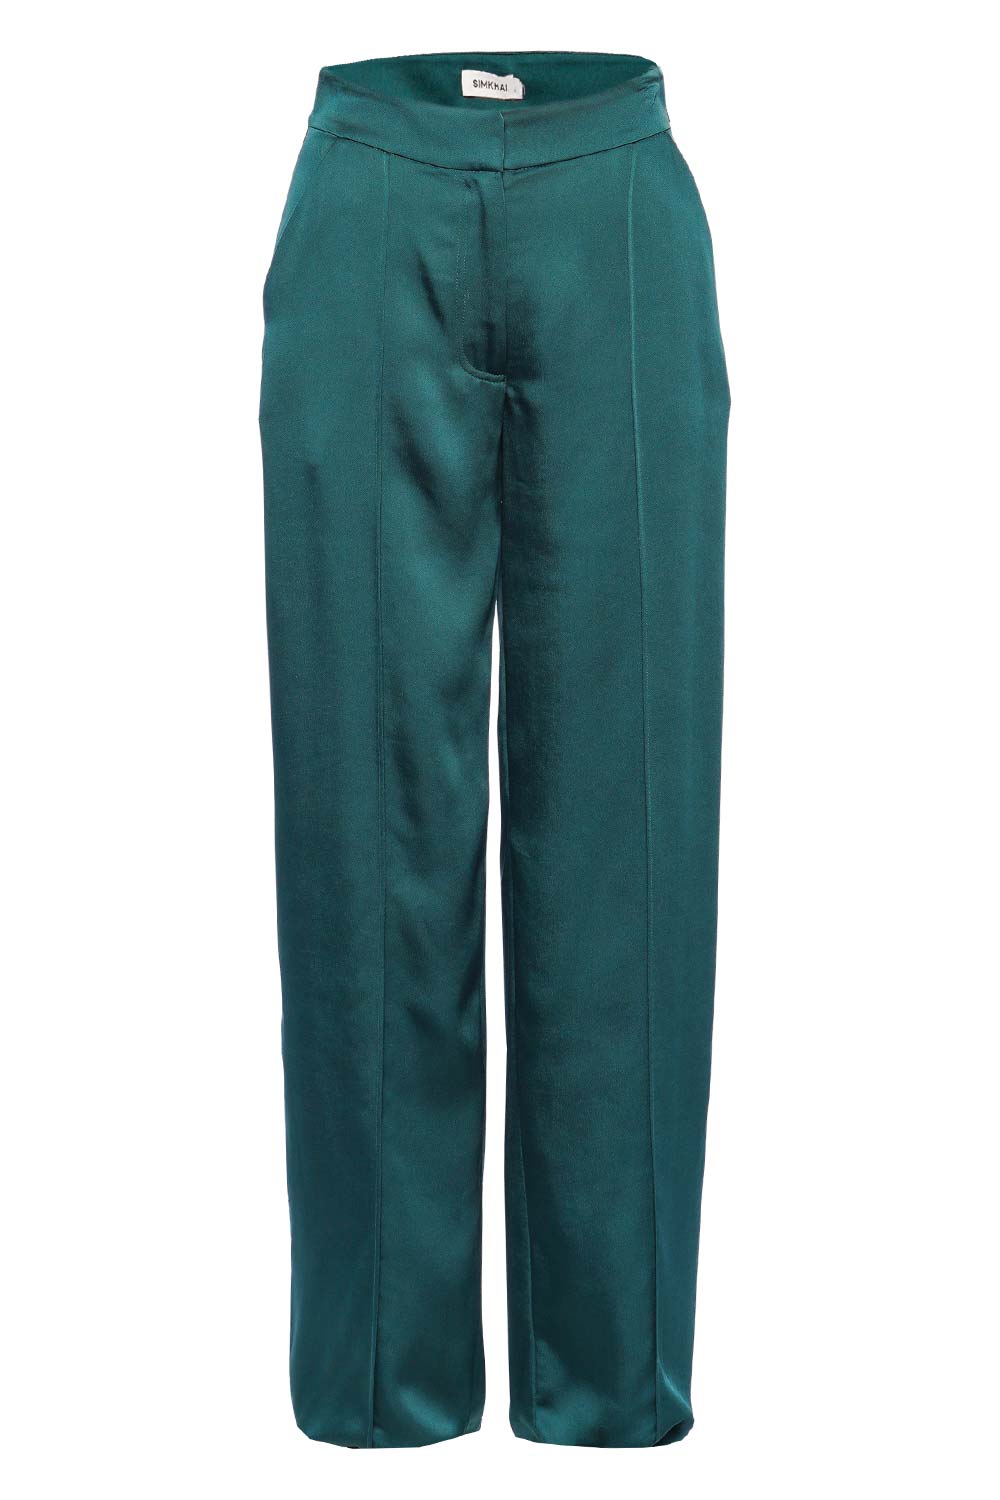 SIMKHAI Kyra Emerald Satin Wide Leg Pants